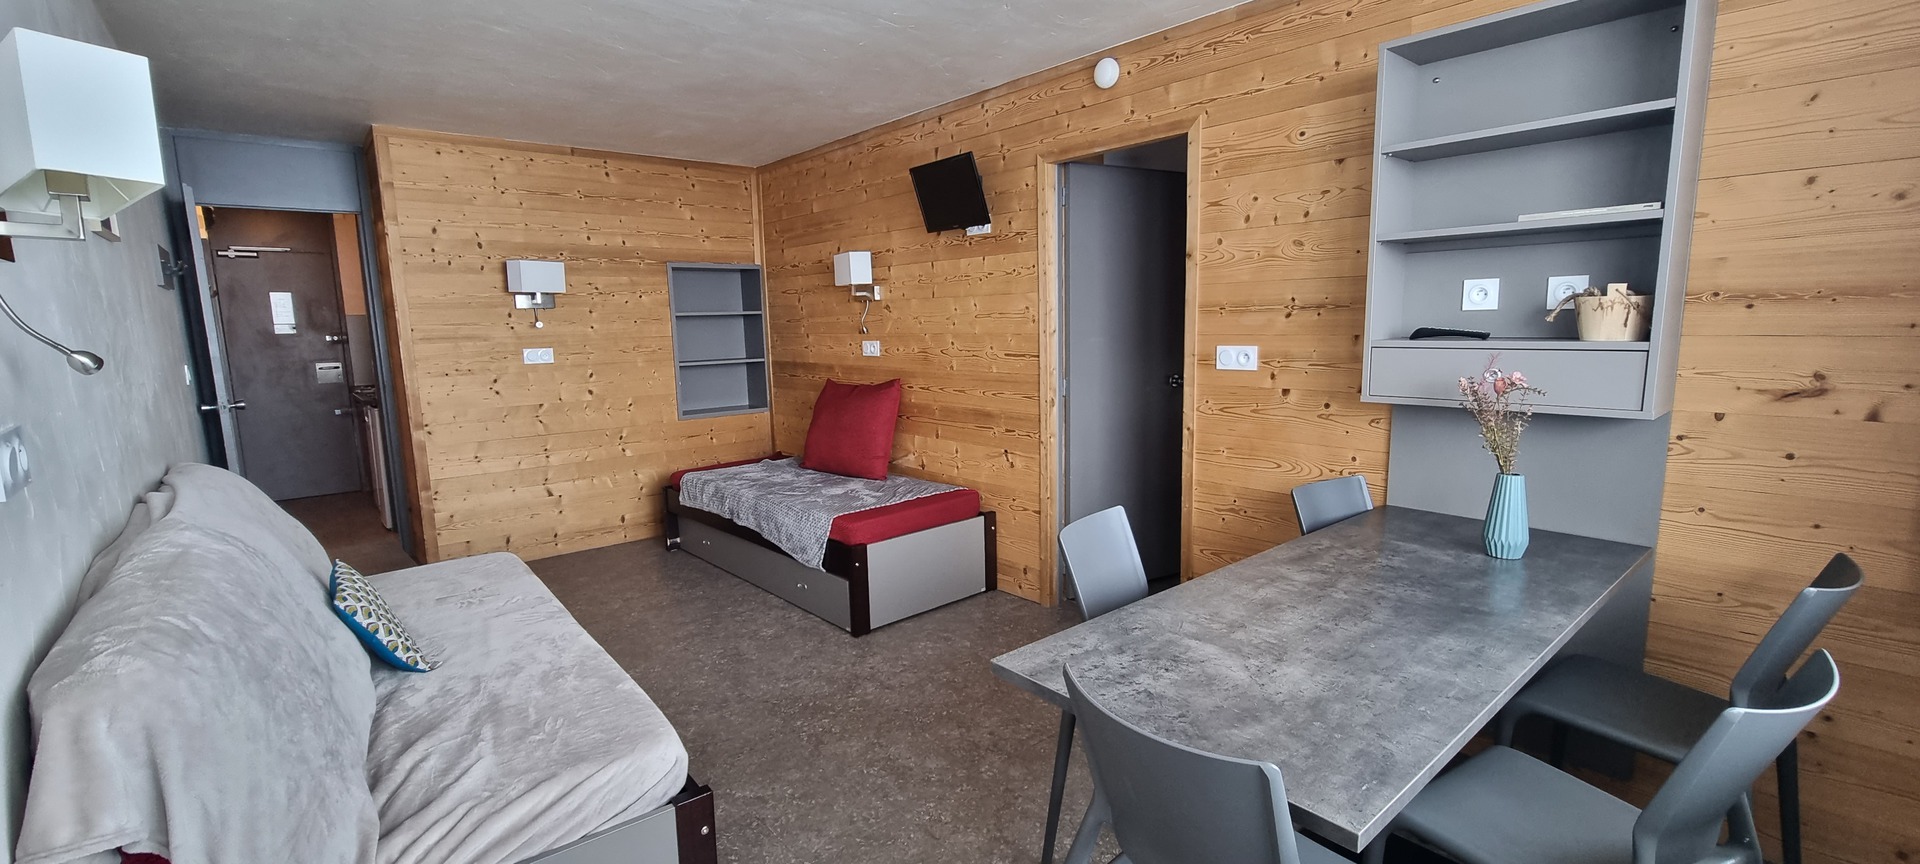 2 rooms 5 people - travelski home choice - Apartements ZENITH - Plagne - Aime 2000